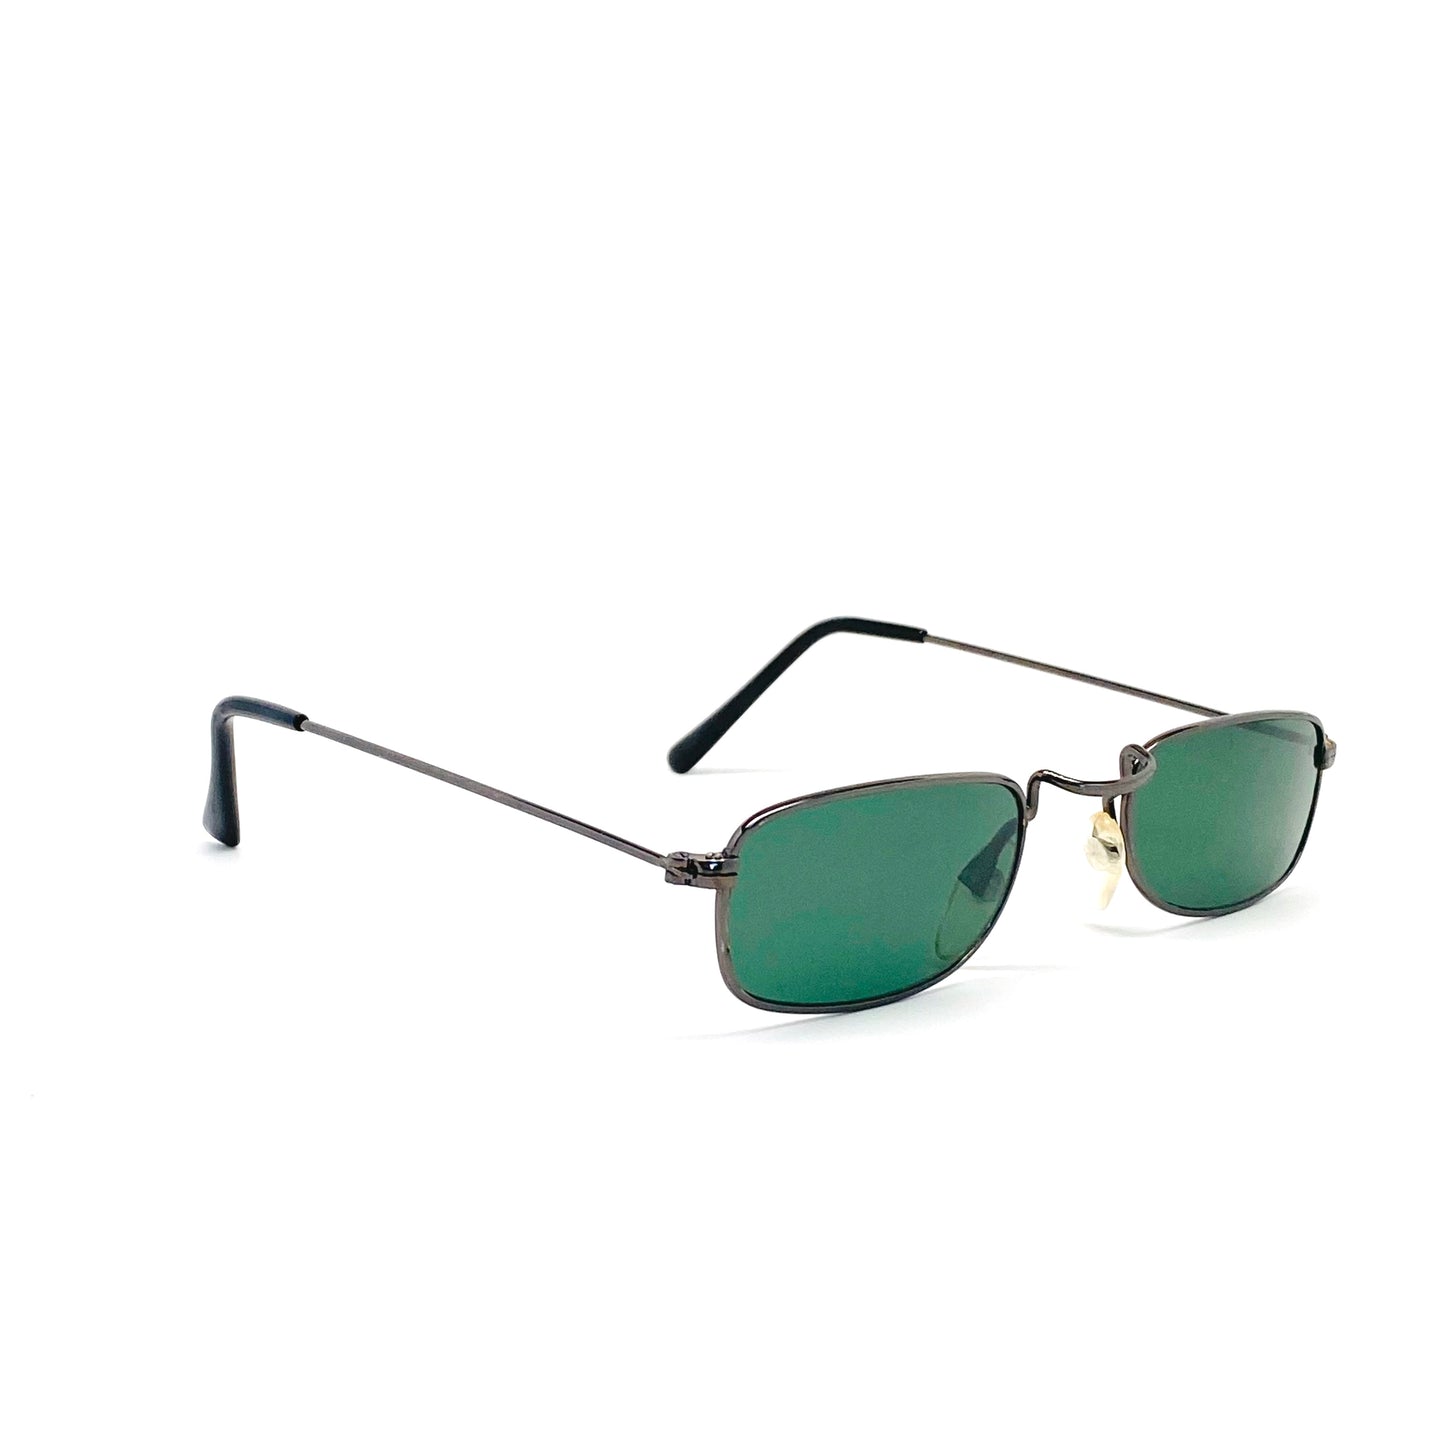 Vintage Small Size 1997 Rectangular Narrow Frame Sunglasses - Grey